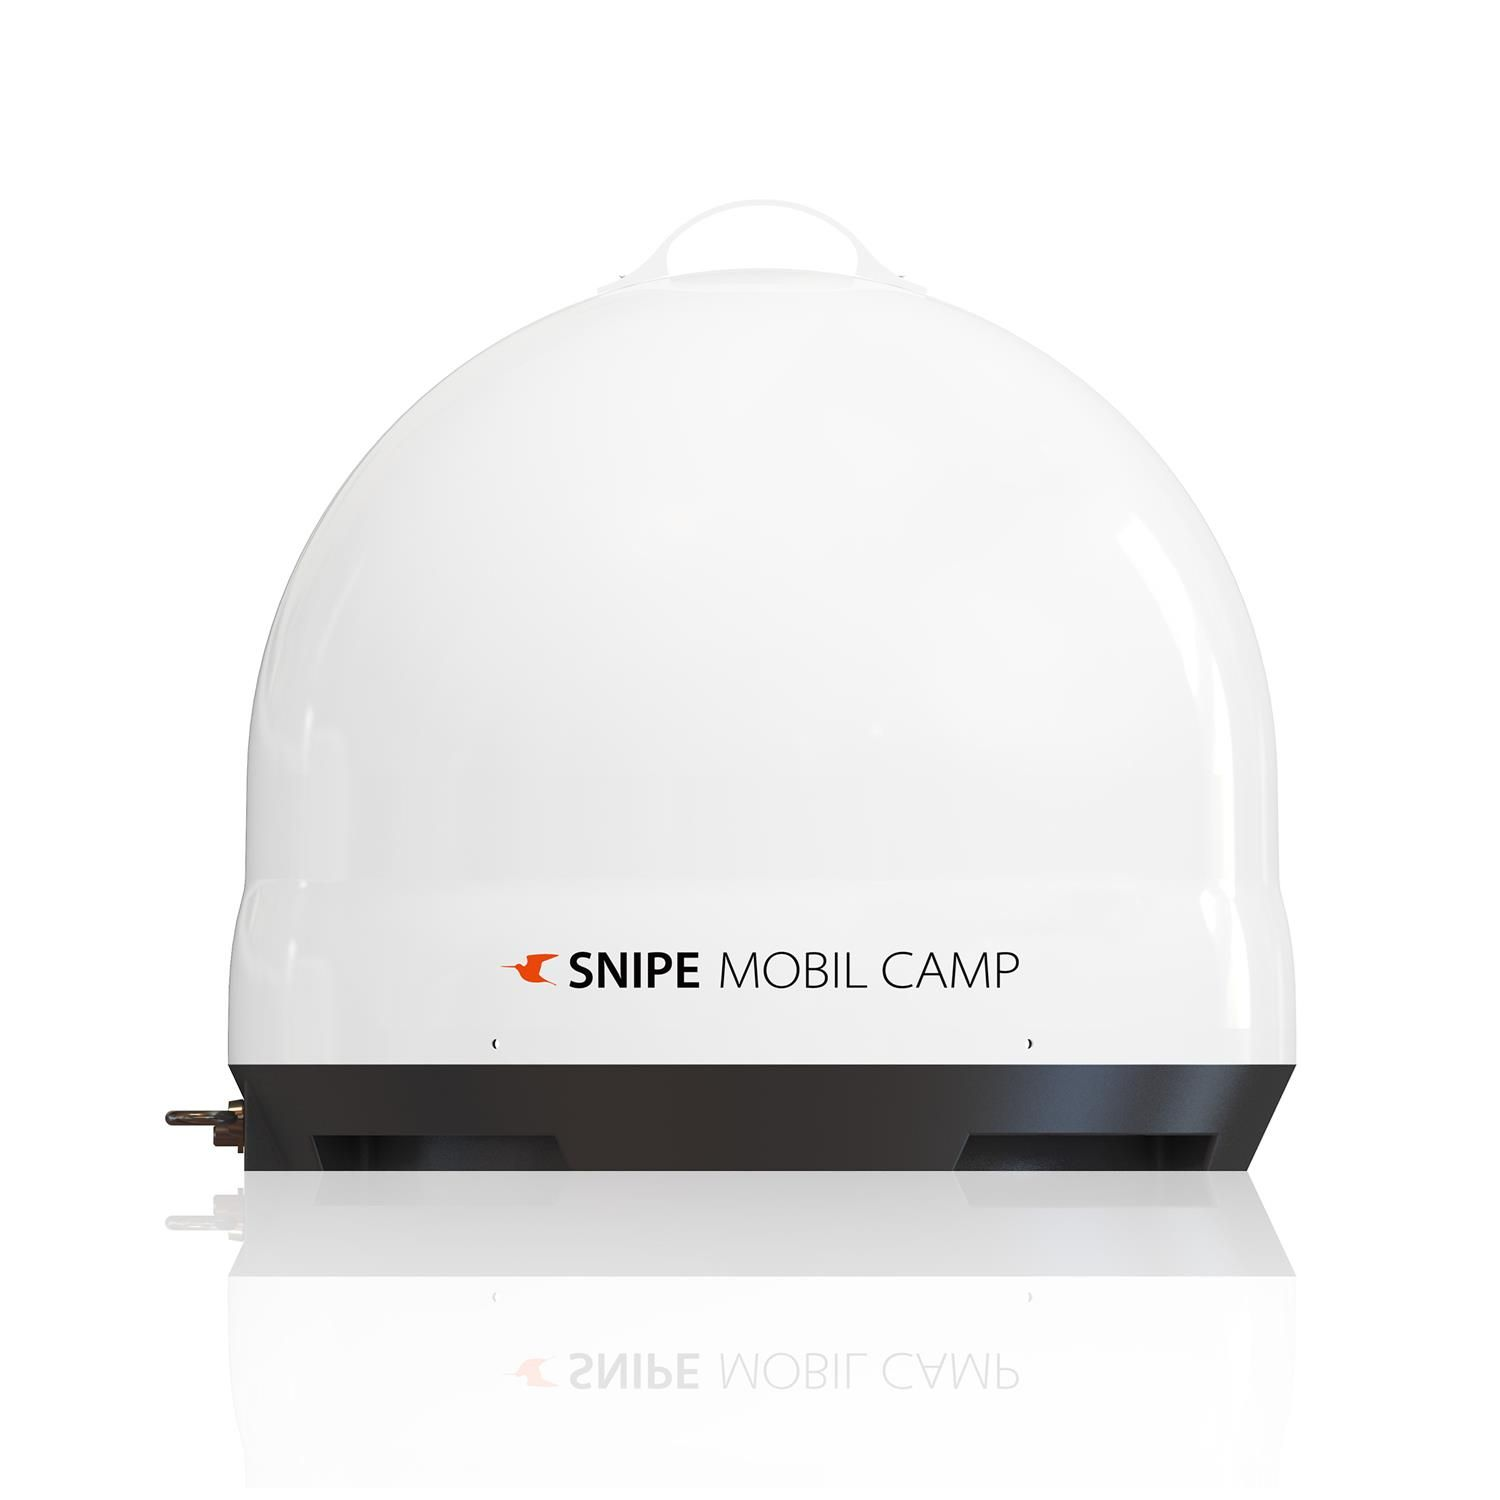 Sat-Antenne Mobil Snipe Camp SELFSAT